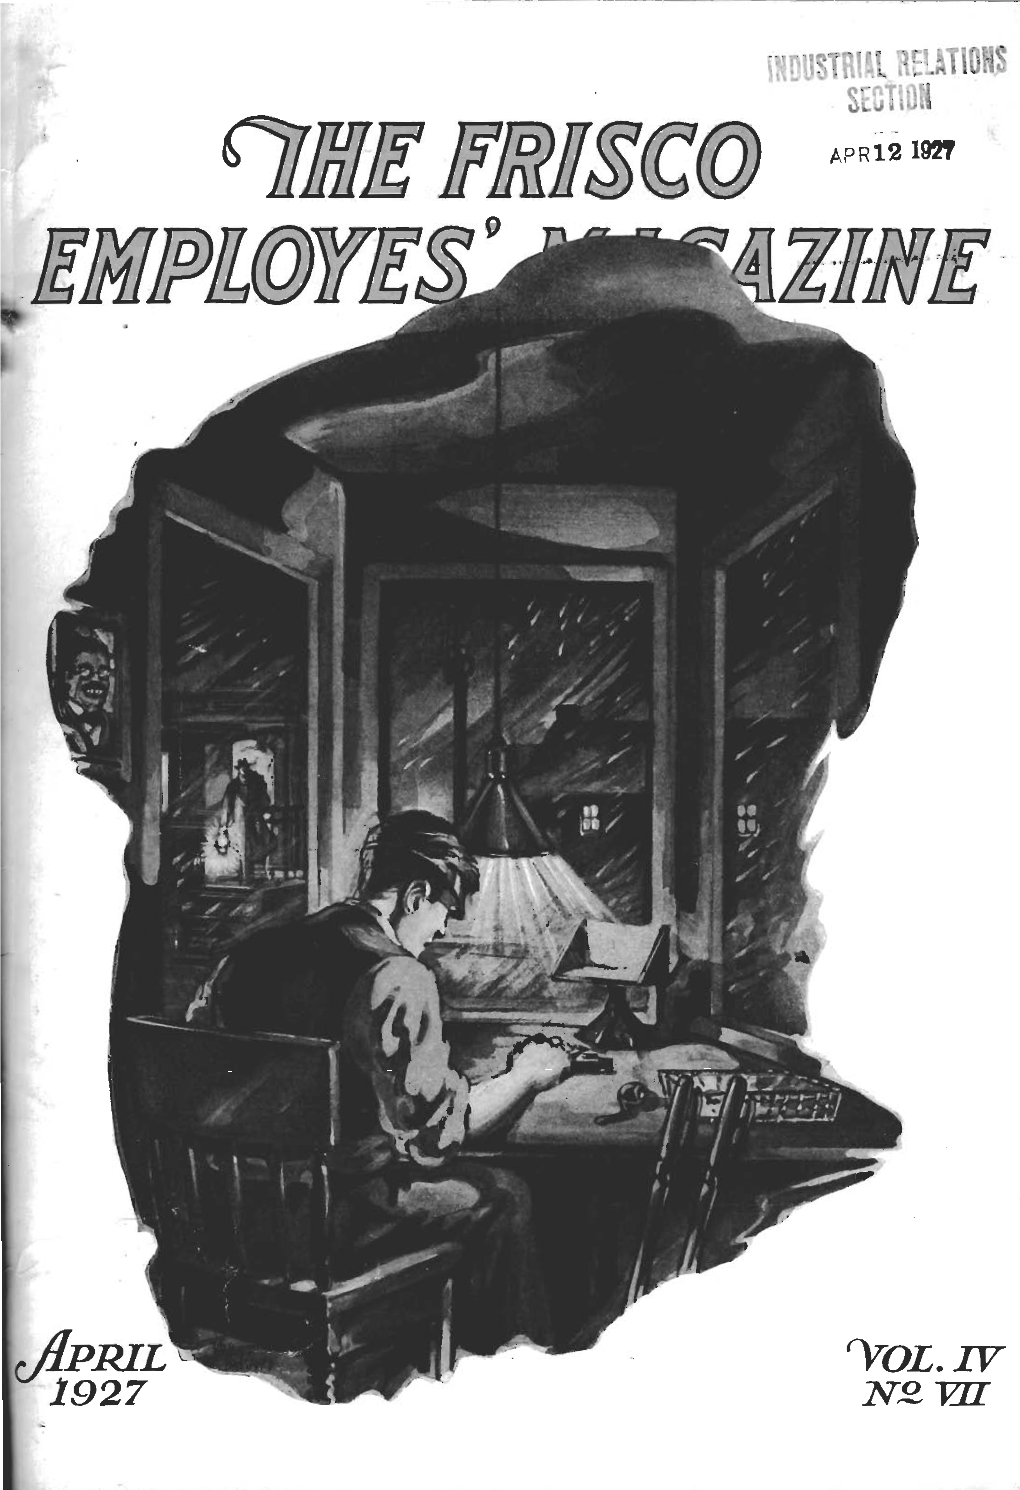 The Frisco Employes' Magazine, April 1927